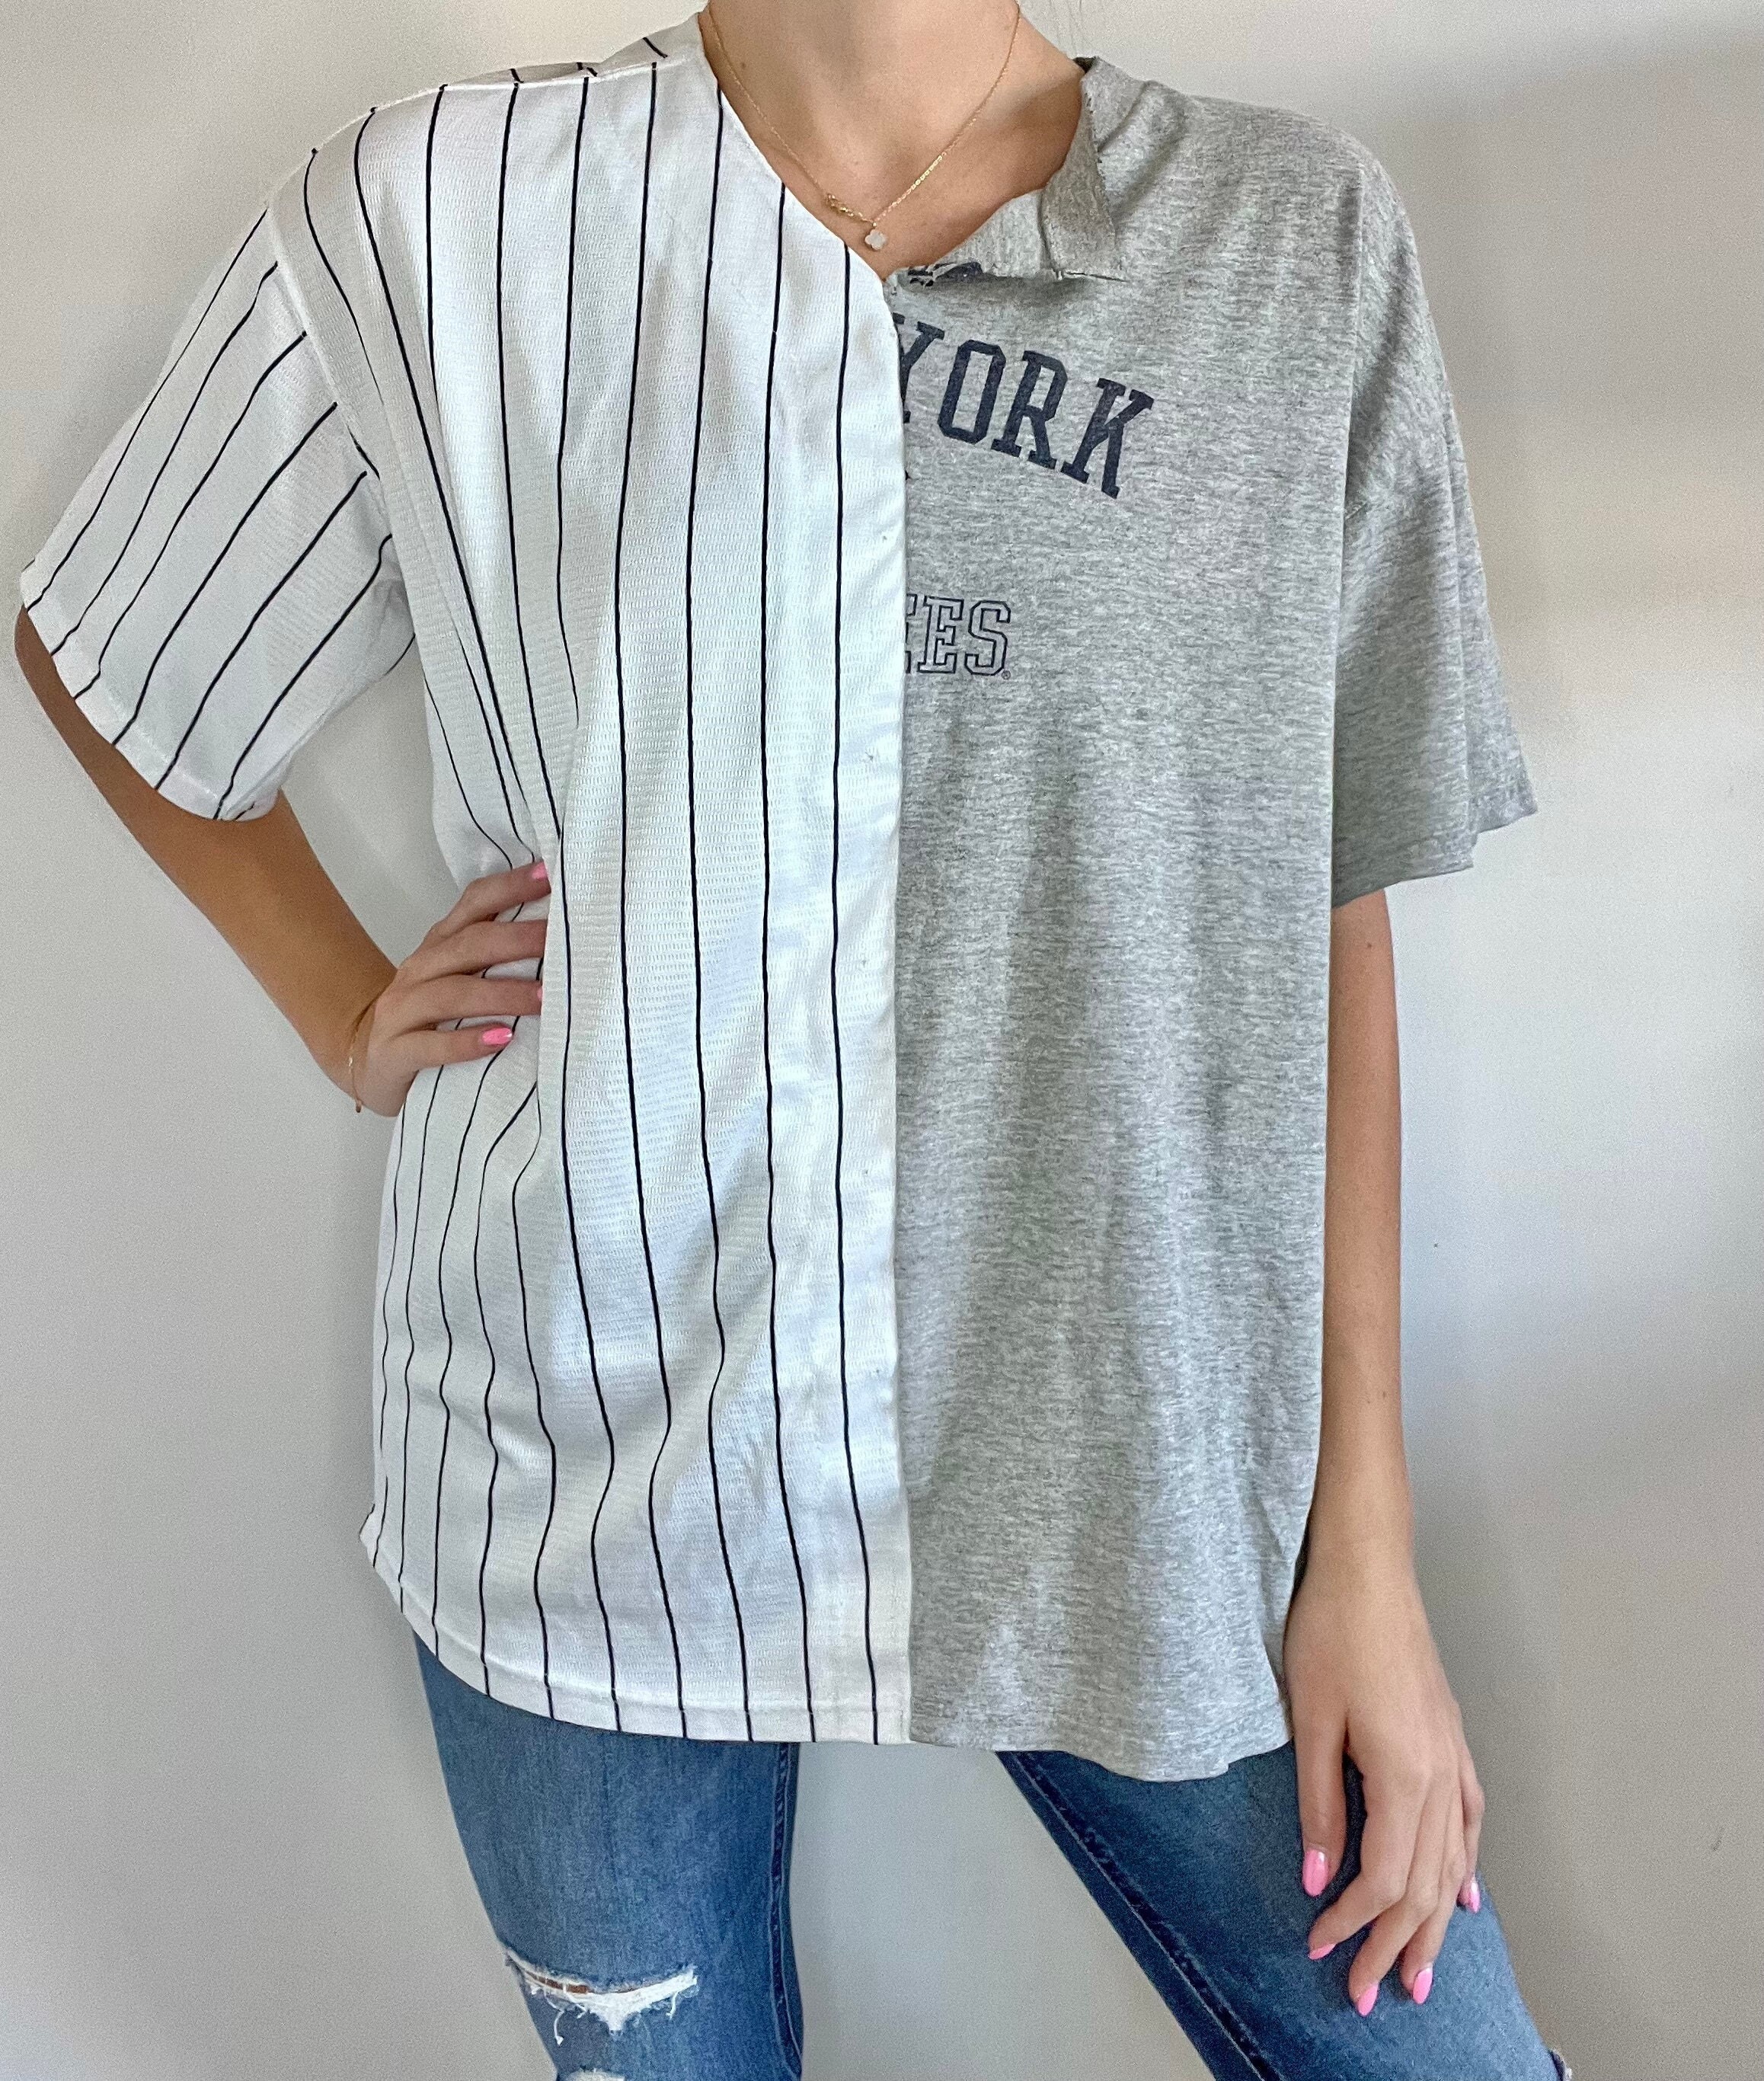 Vintage Spliced Jersey Tee Baseball Sweatshirt Yankees